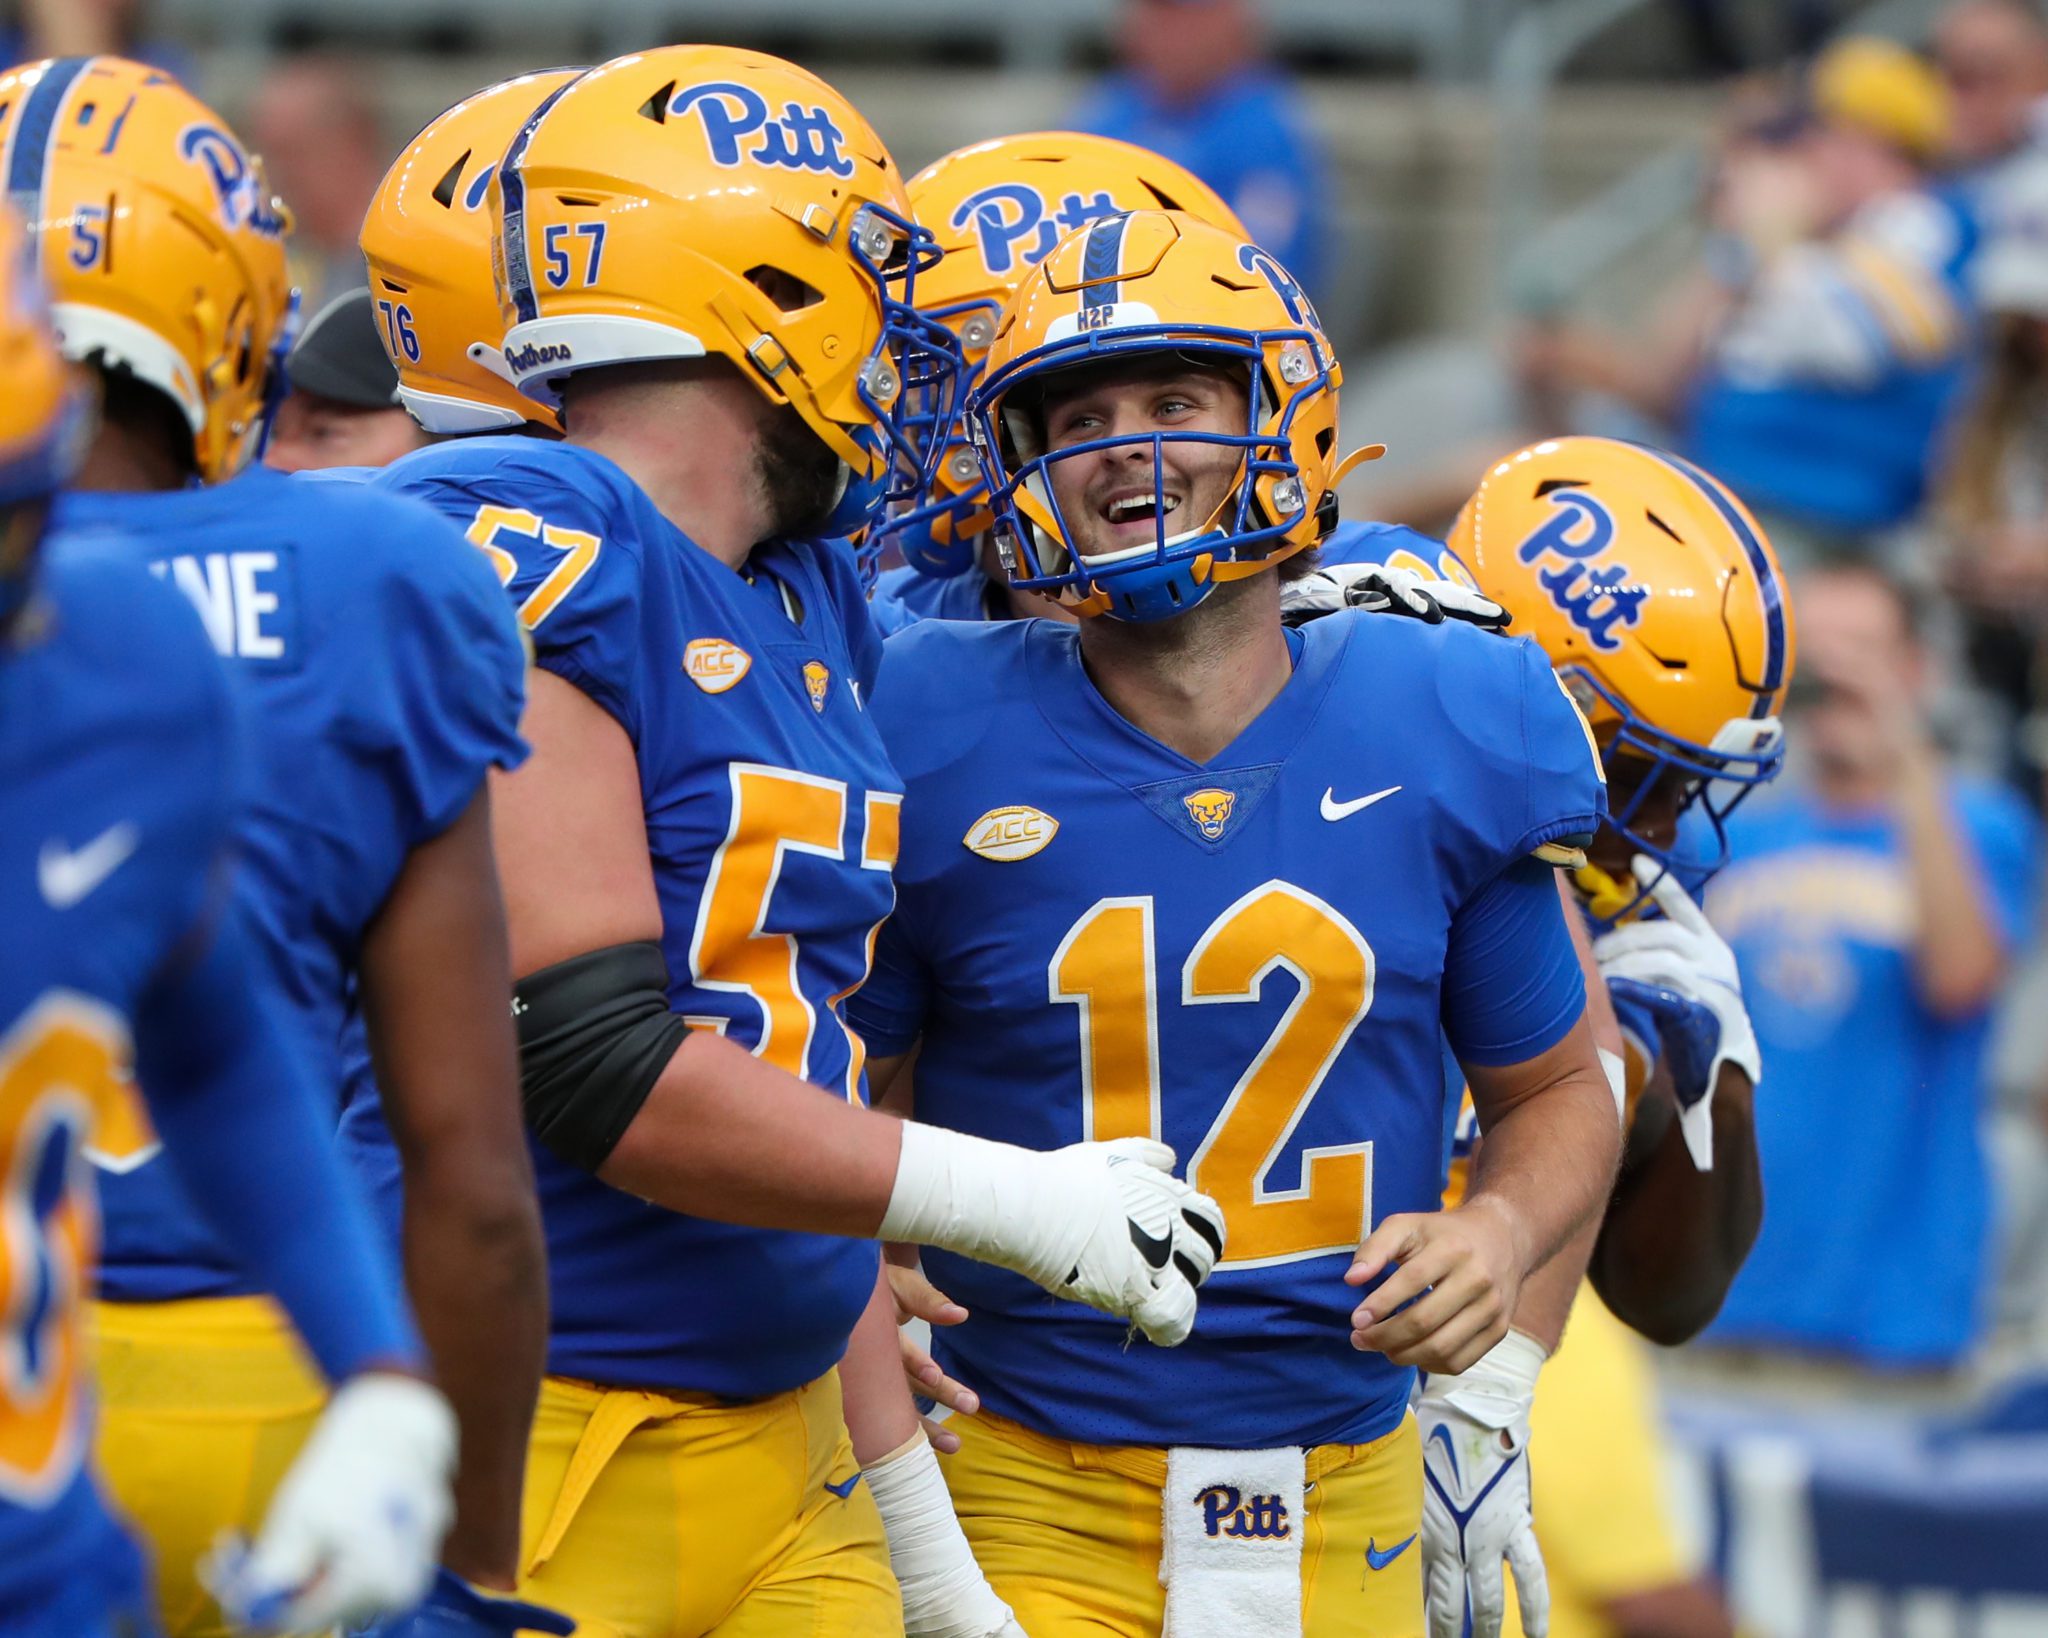 Sun Bowl Unveils Uniform Matchup for Pitt-UCLA - Pittsburgh Sports Now